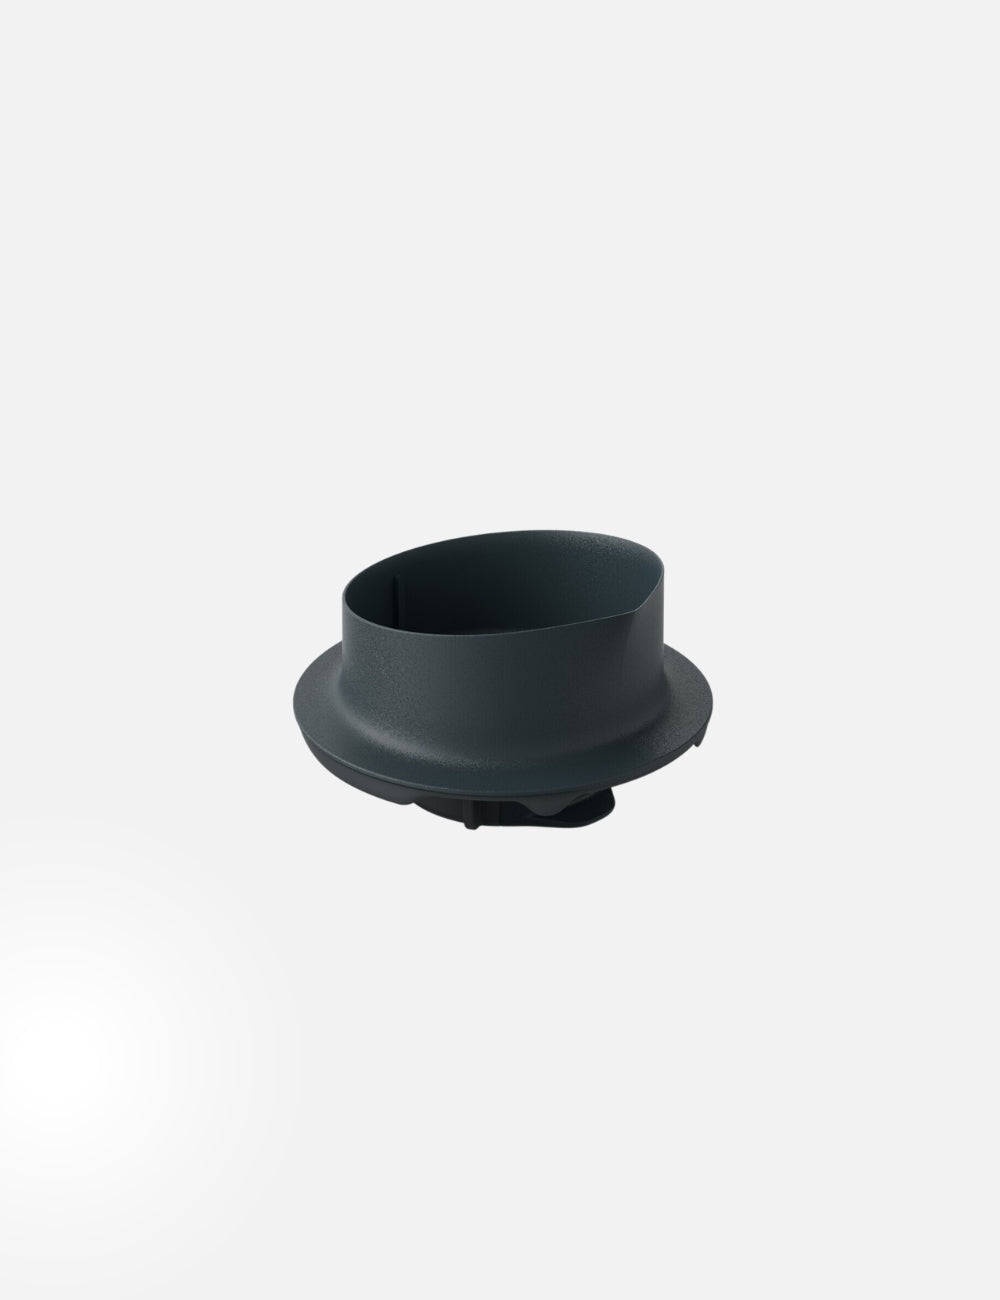 TM6® (Black) Measuring Cup